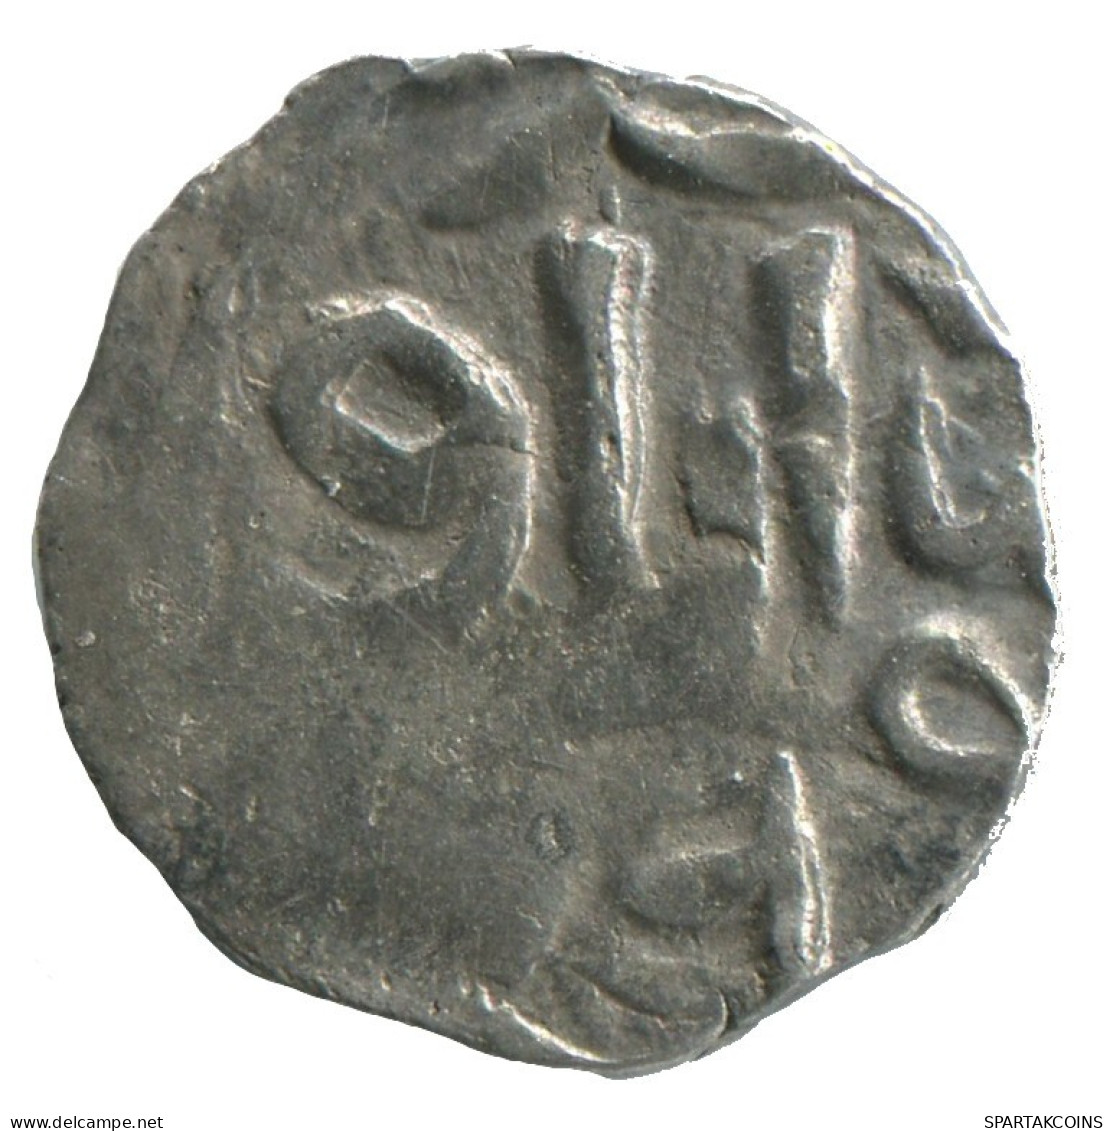 GOLDEN HORDE Silver Dirham Medieval Islamic Coin 1.3g/16mm #NNN2017.8.D.A - Islámicas